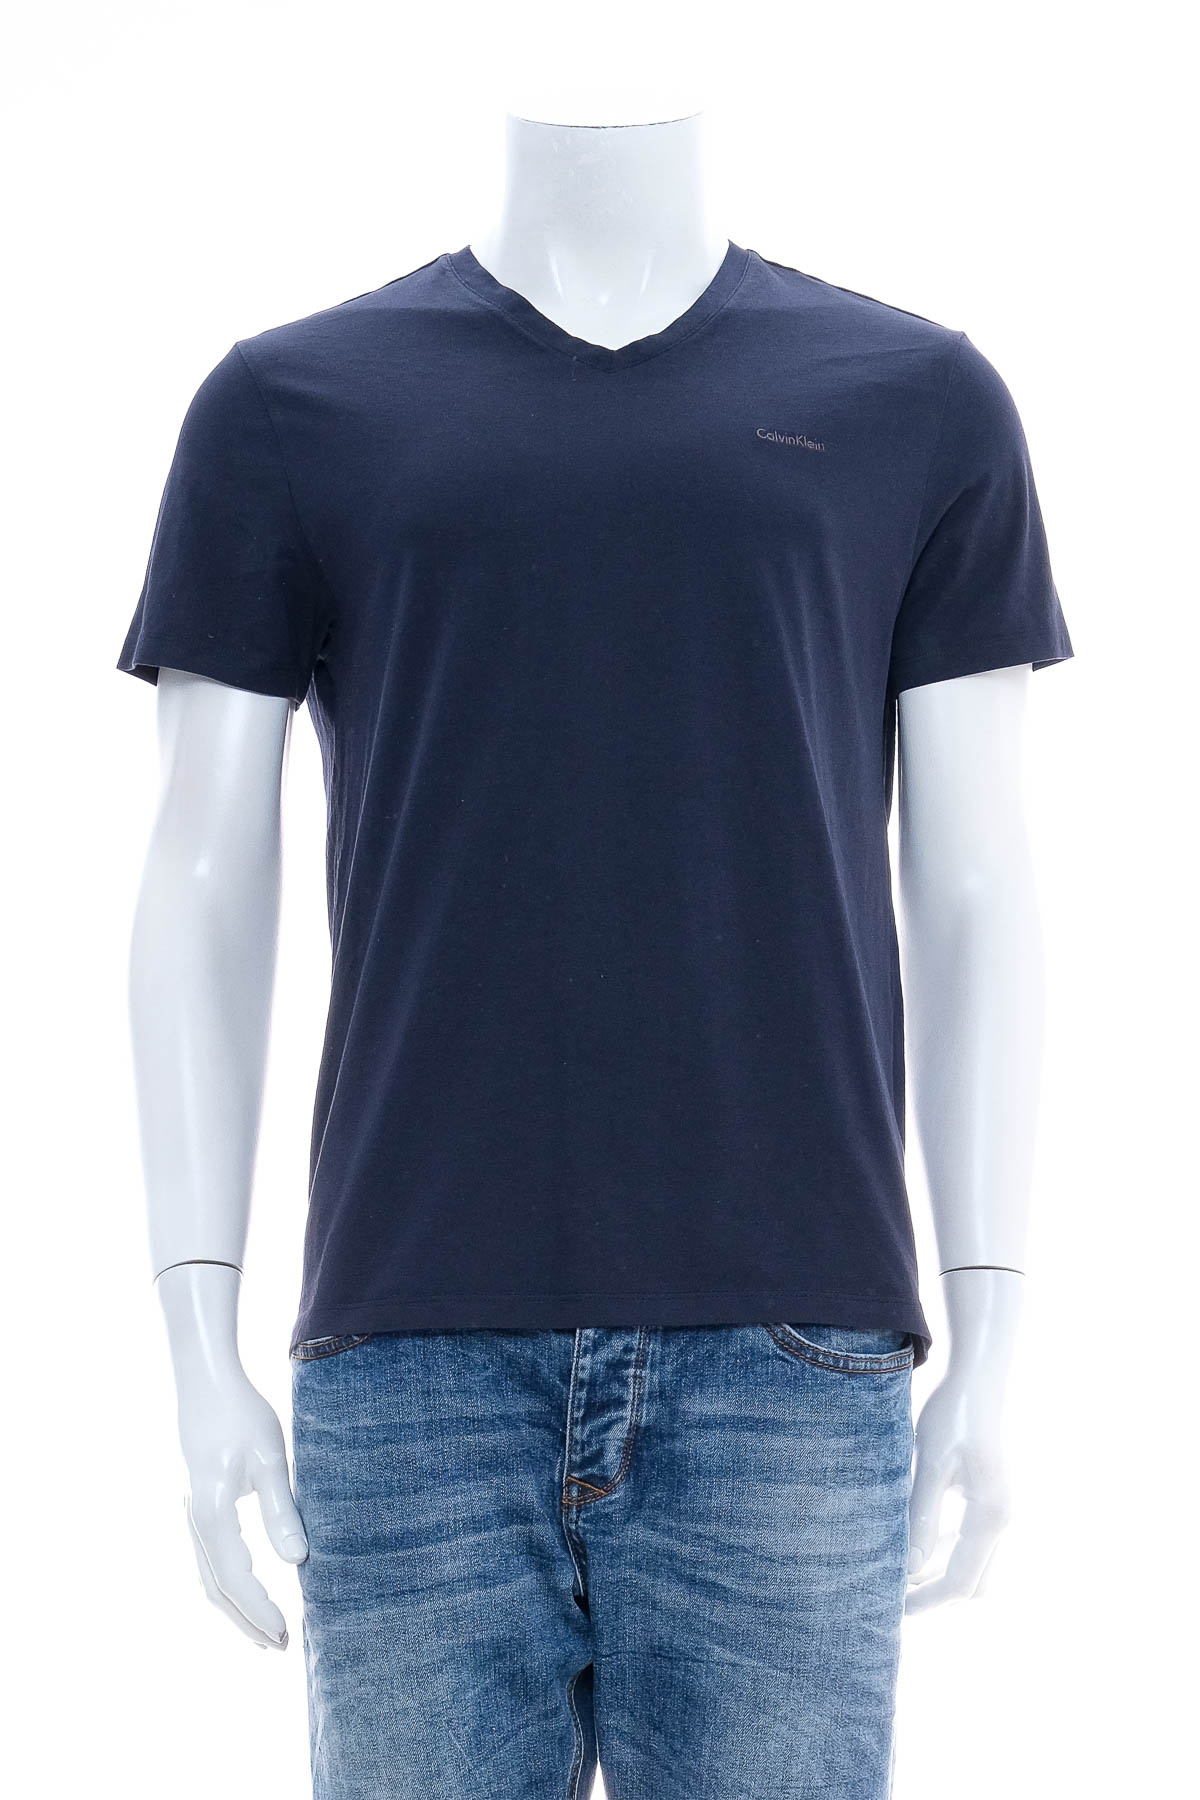 Men's T-shirt - Calvin Klein - 0